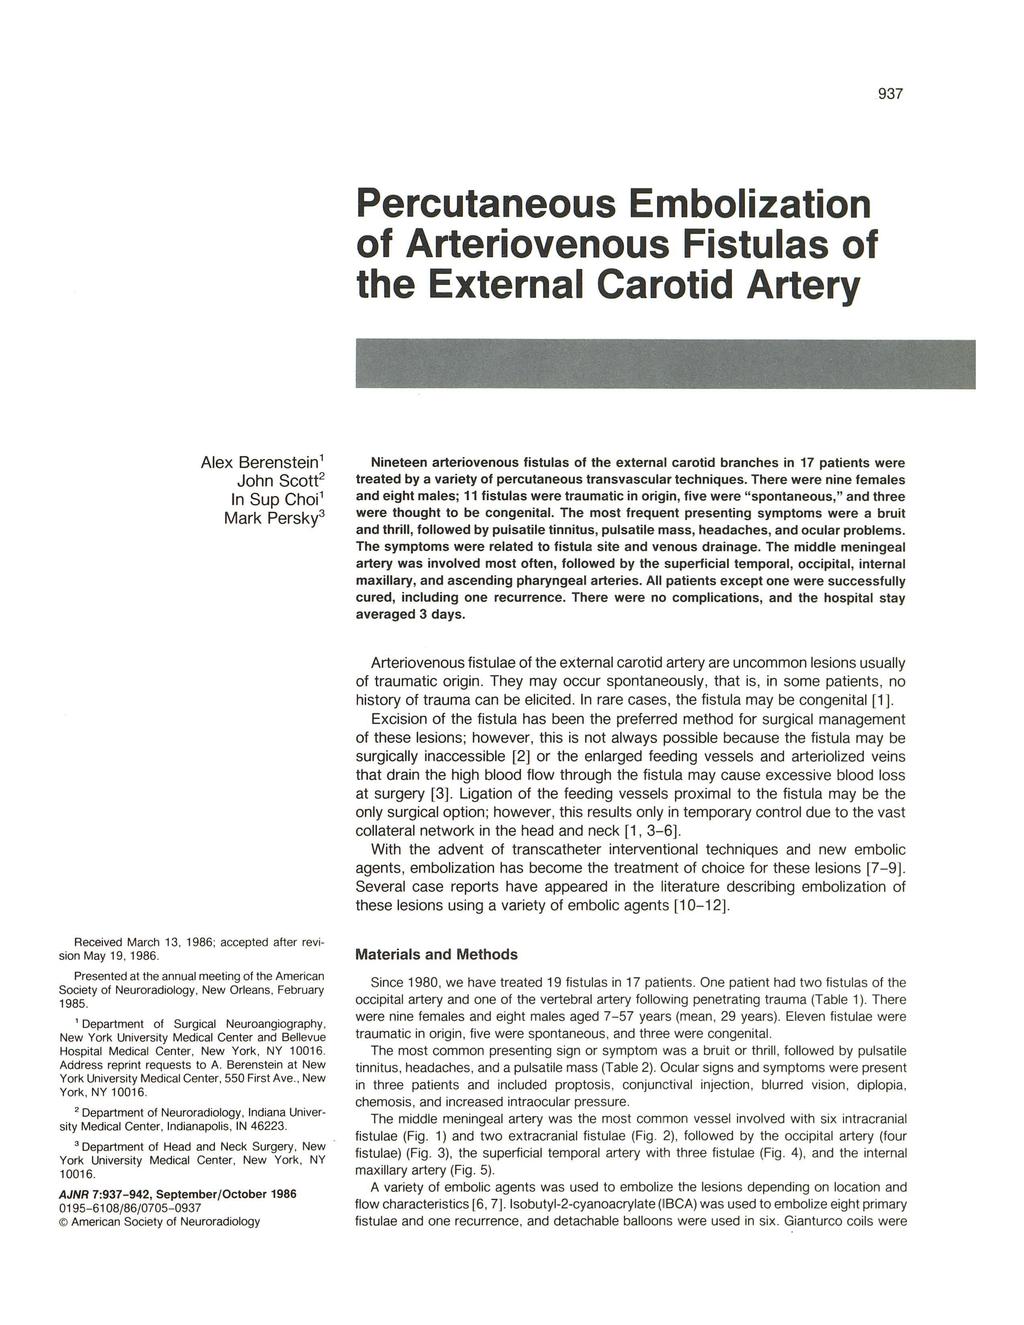 937 Percutaneous Embolization of rteriovenous Fistulas of the External Carotid rtery lex erenstein 1 John Scote In Sup Choi 1 Mark Persky3 Nineteen arteriovenous fistulas of the external carotid